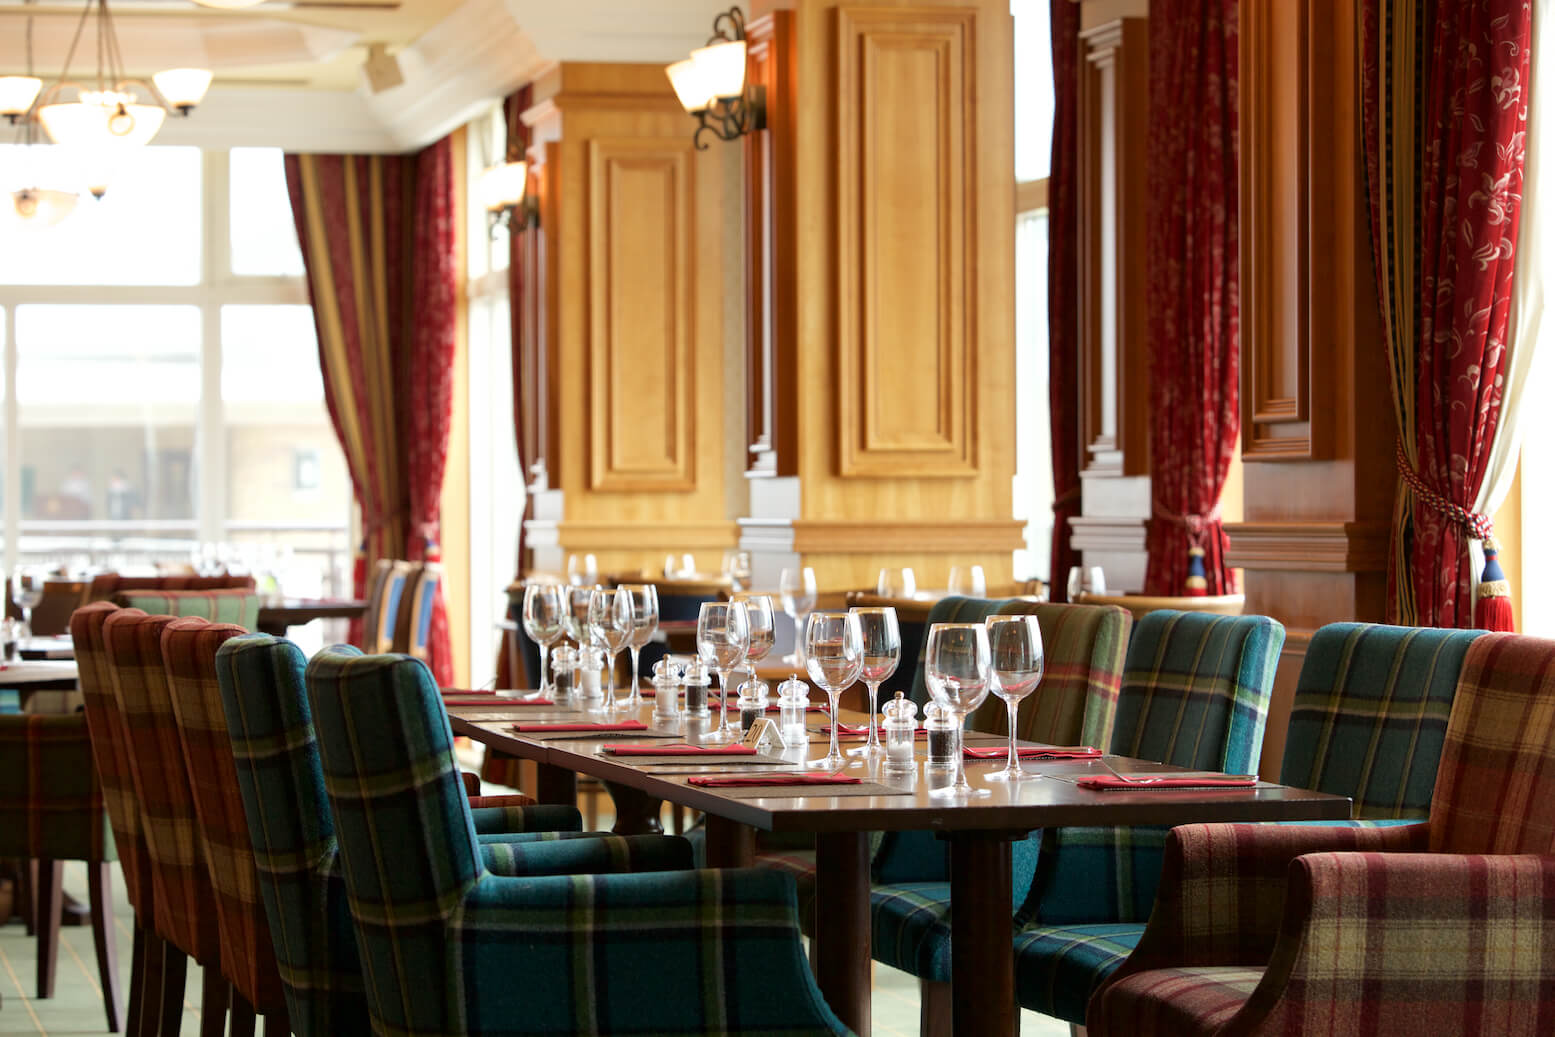 Luxuria Lifestyle's Sports Editor Joshua Aaron reviews British Open Venue, The Carnoustie Golf Hotel in Scotland